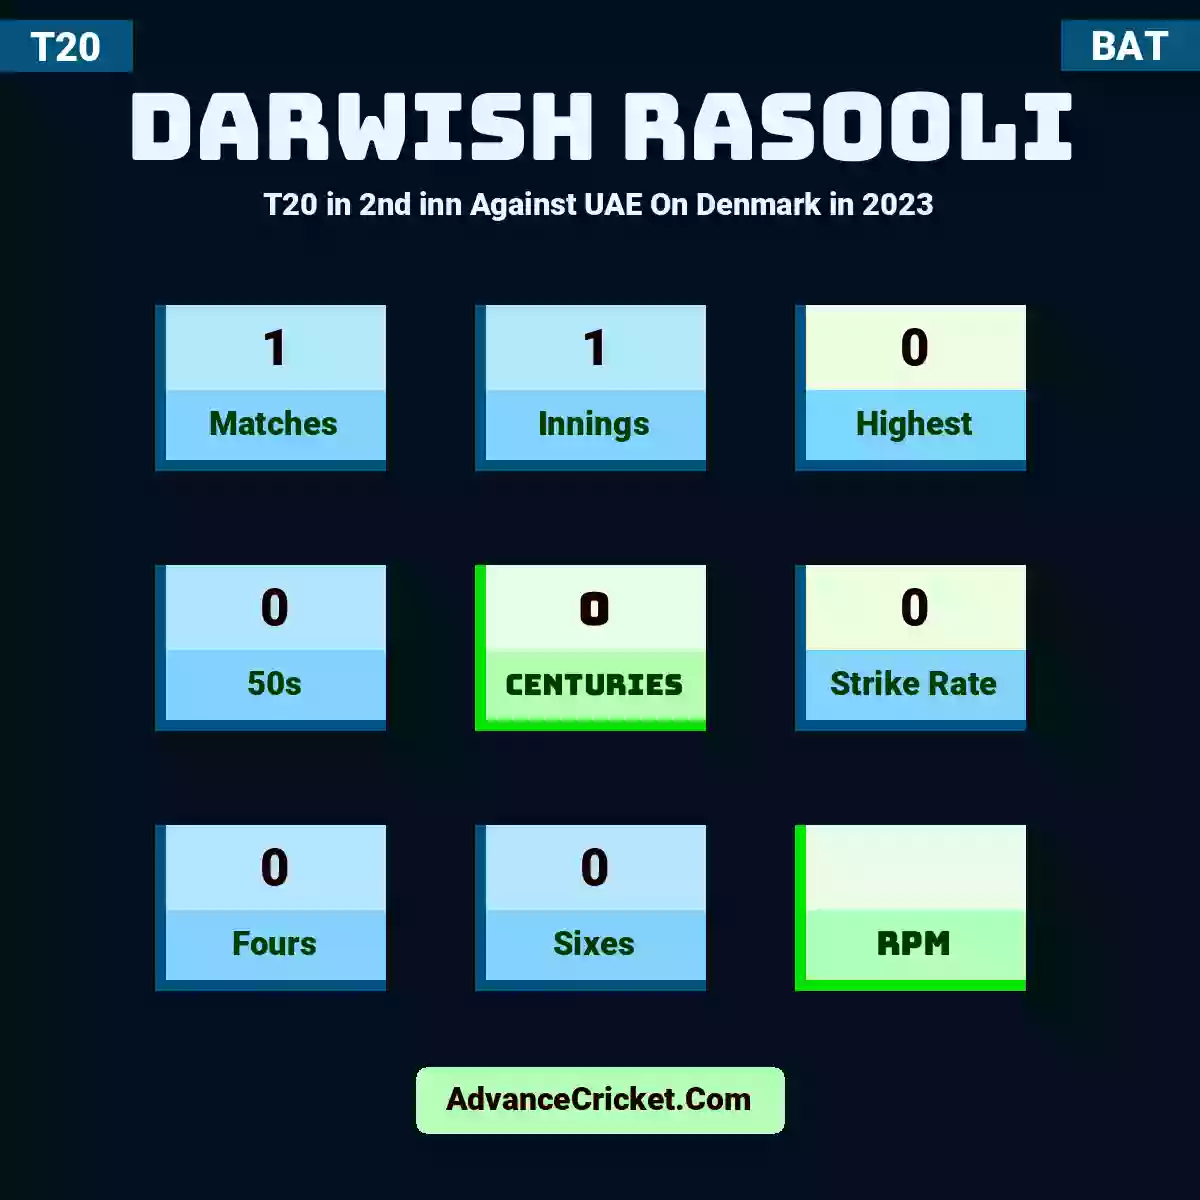 Darwish Rasooli T20  in 2nd inn Against UAE On Denmark in 2023, Darwish Rasooli played 1 matches, scored 0 runs as highest, 0 half-centuries, and 0 centuries, with a strike rate of 0. D.Rasooli hit 0 fours and 0 sixes.